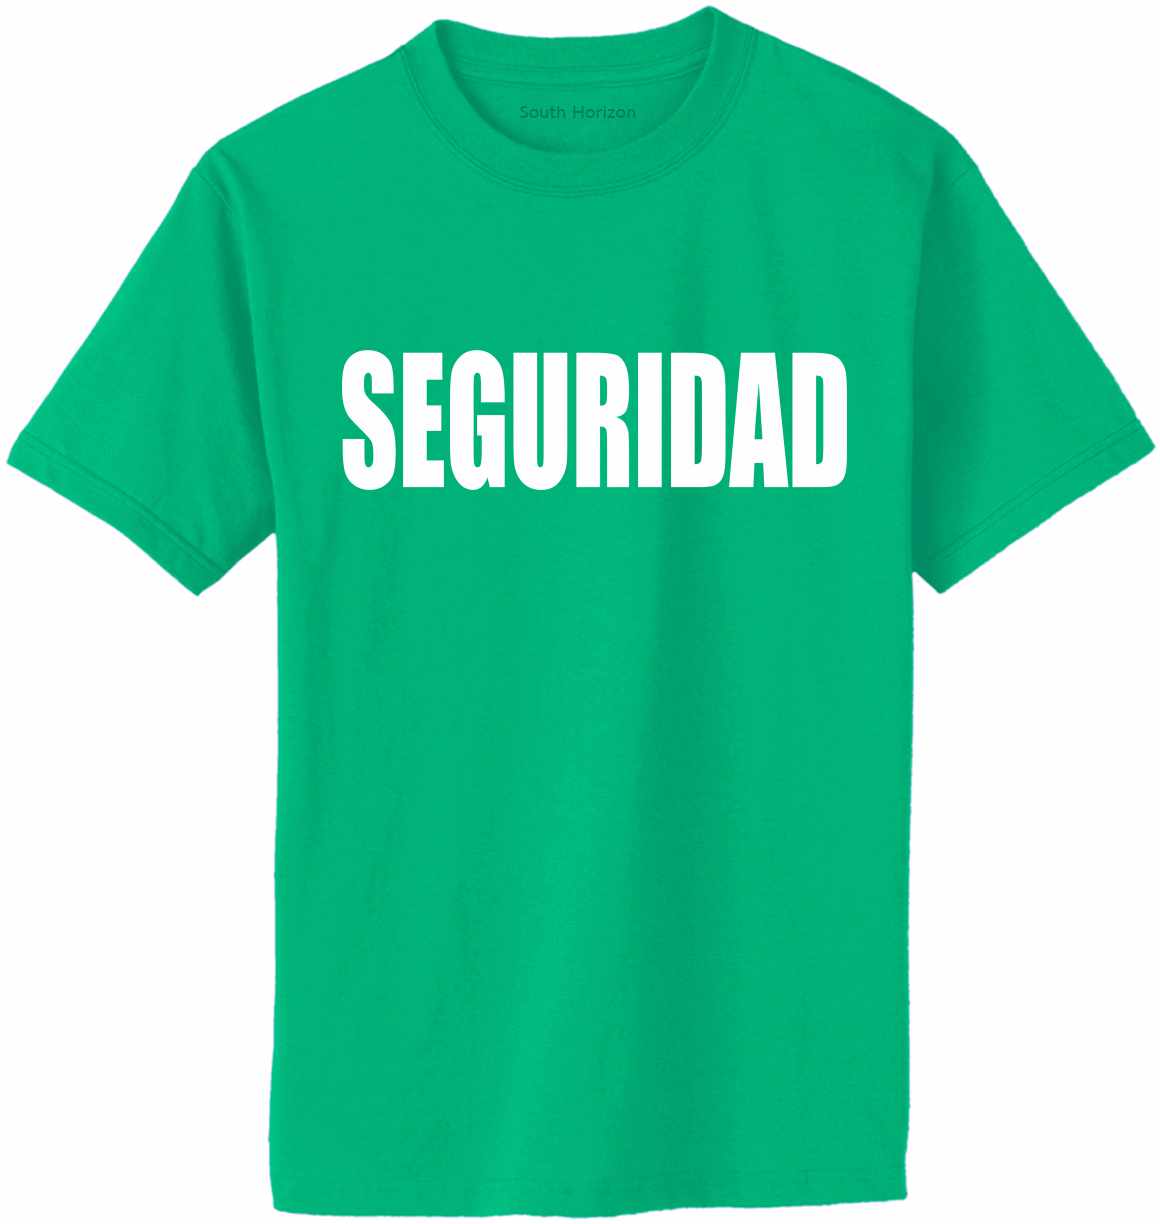 SEGURIDAD Adult T-Shirt (#691-1)